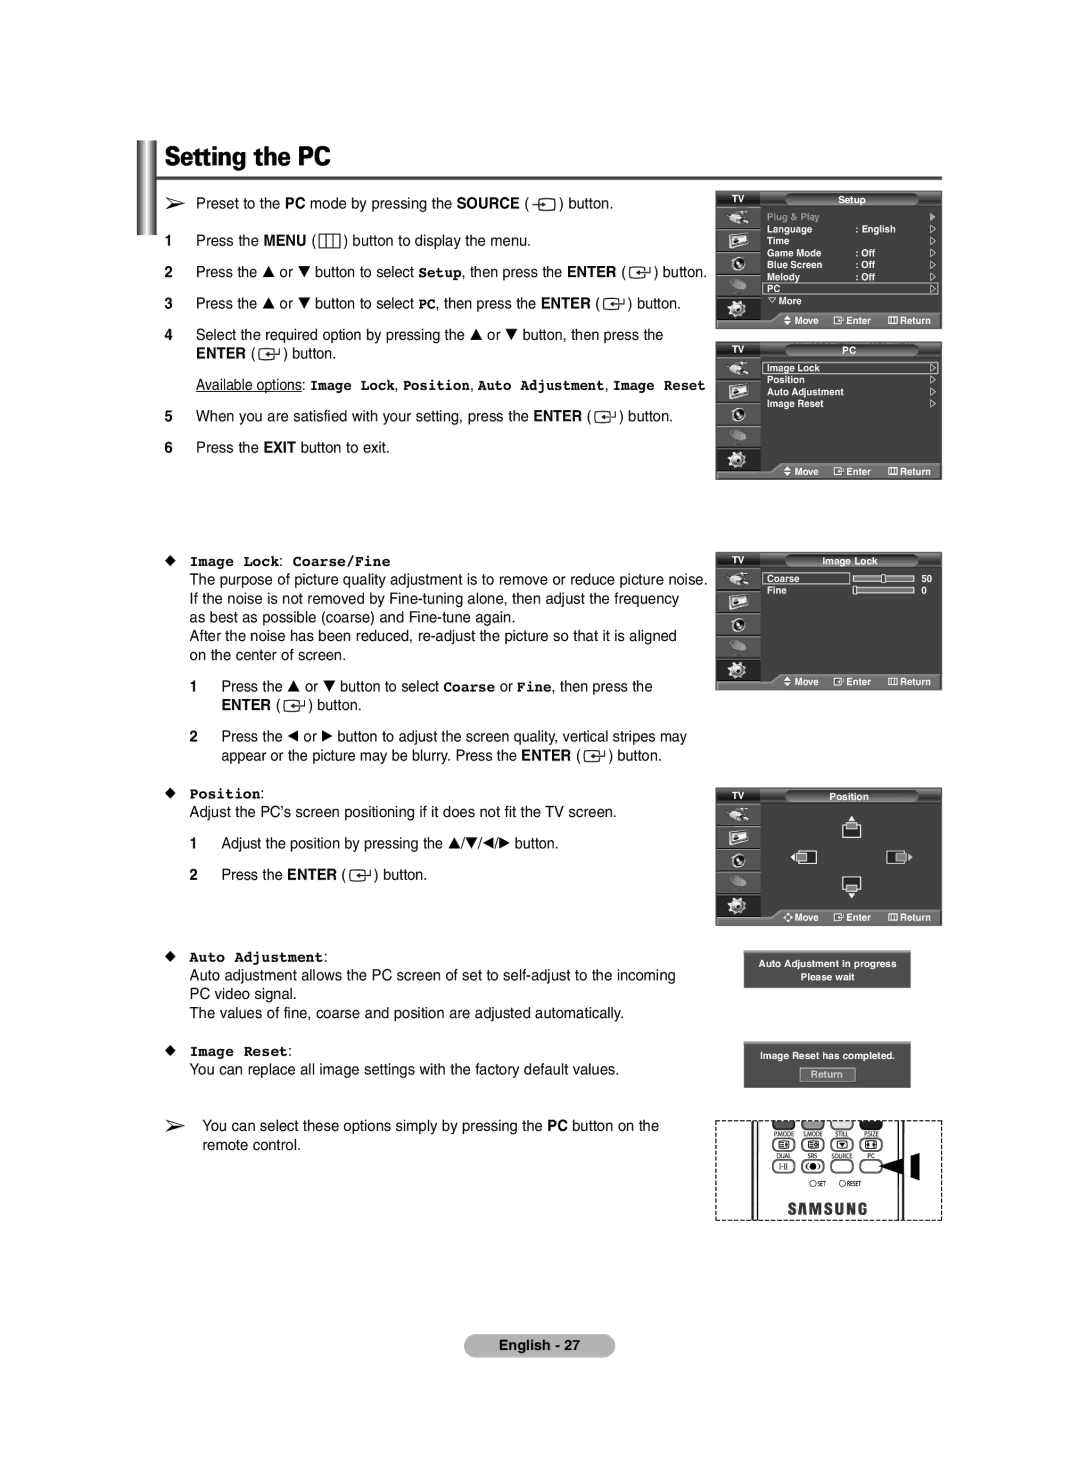 Samsung BN68-00990V-03 manual Setting the PC, Image Lock Coarse/Fine, Auto Adjustment, Image Reset 